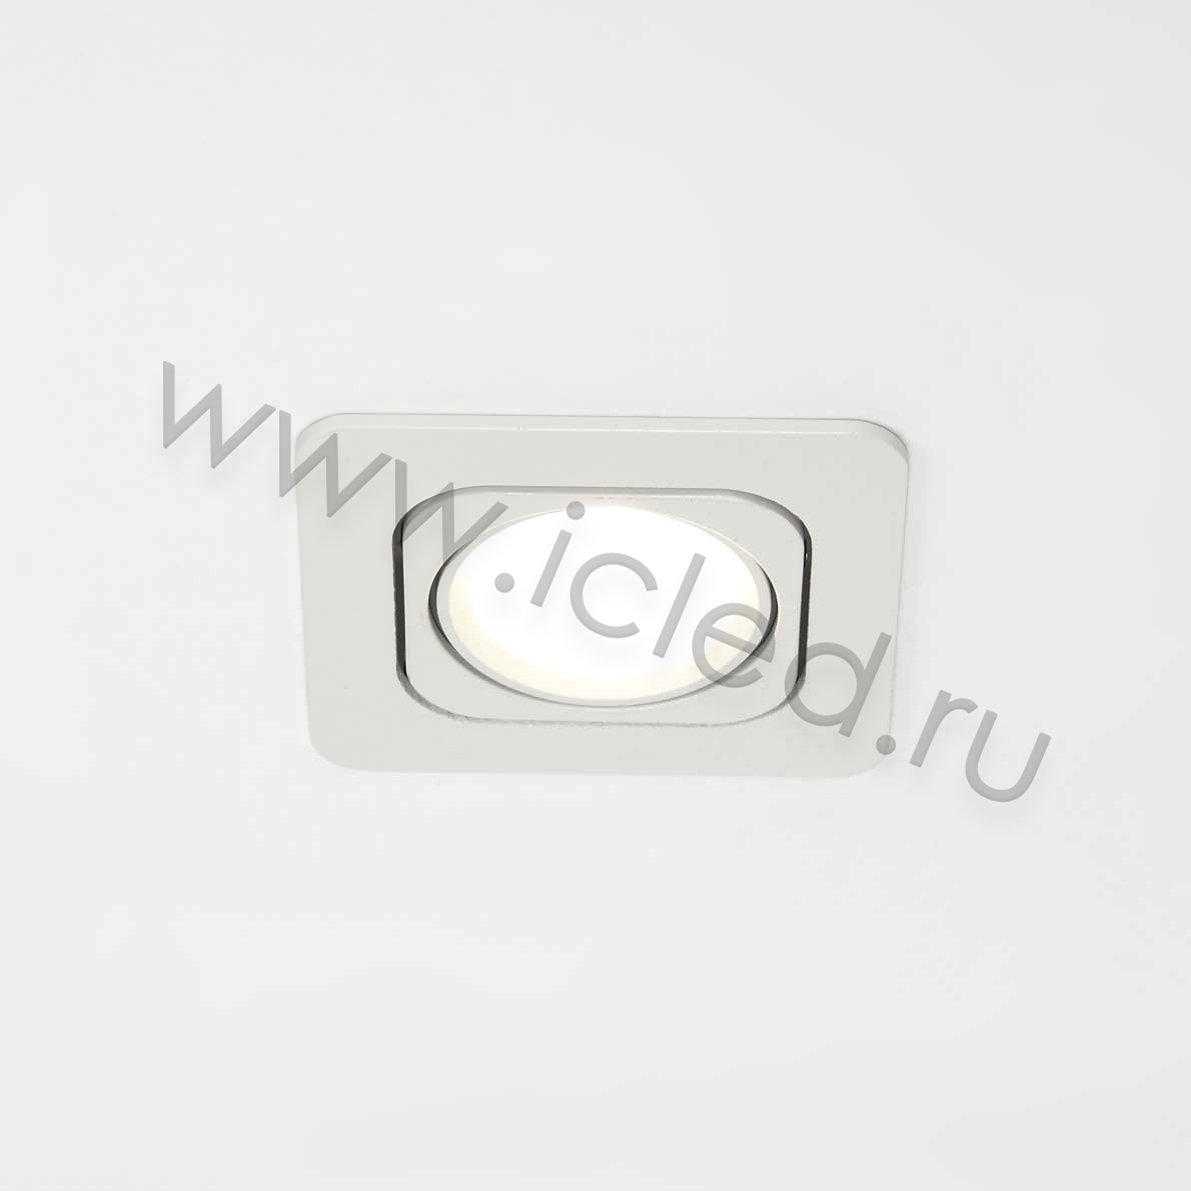 Светодиодные светильники Светодиодный светильник встраиваемый 98.1 series white housing BW103 (5W,220V,day white)